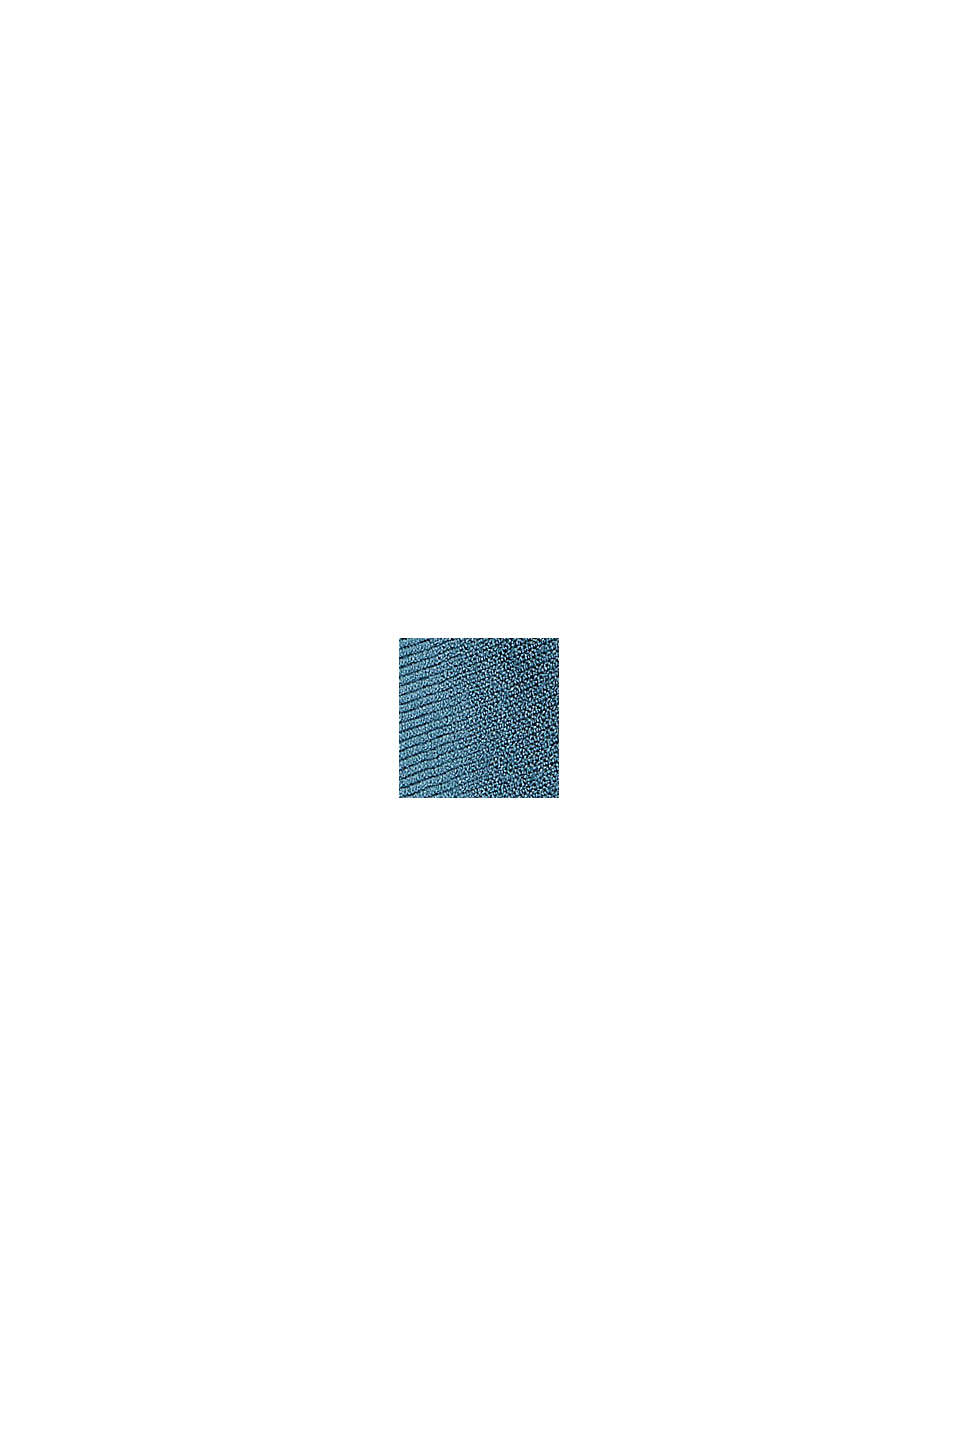 Jersey con mangas murciélago, LENZING™ ECOVERO™, PETROL BLUE, swatch